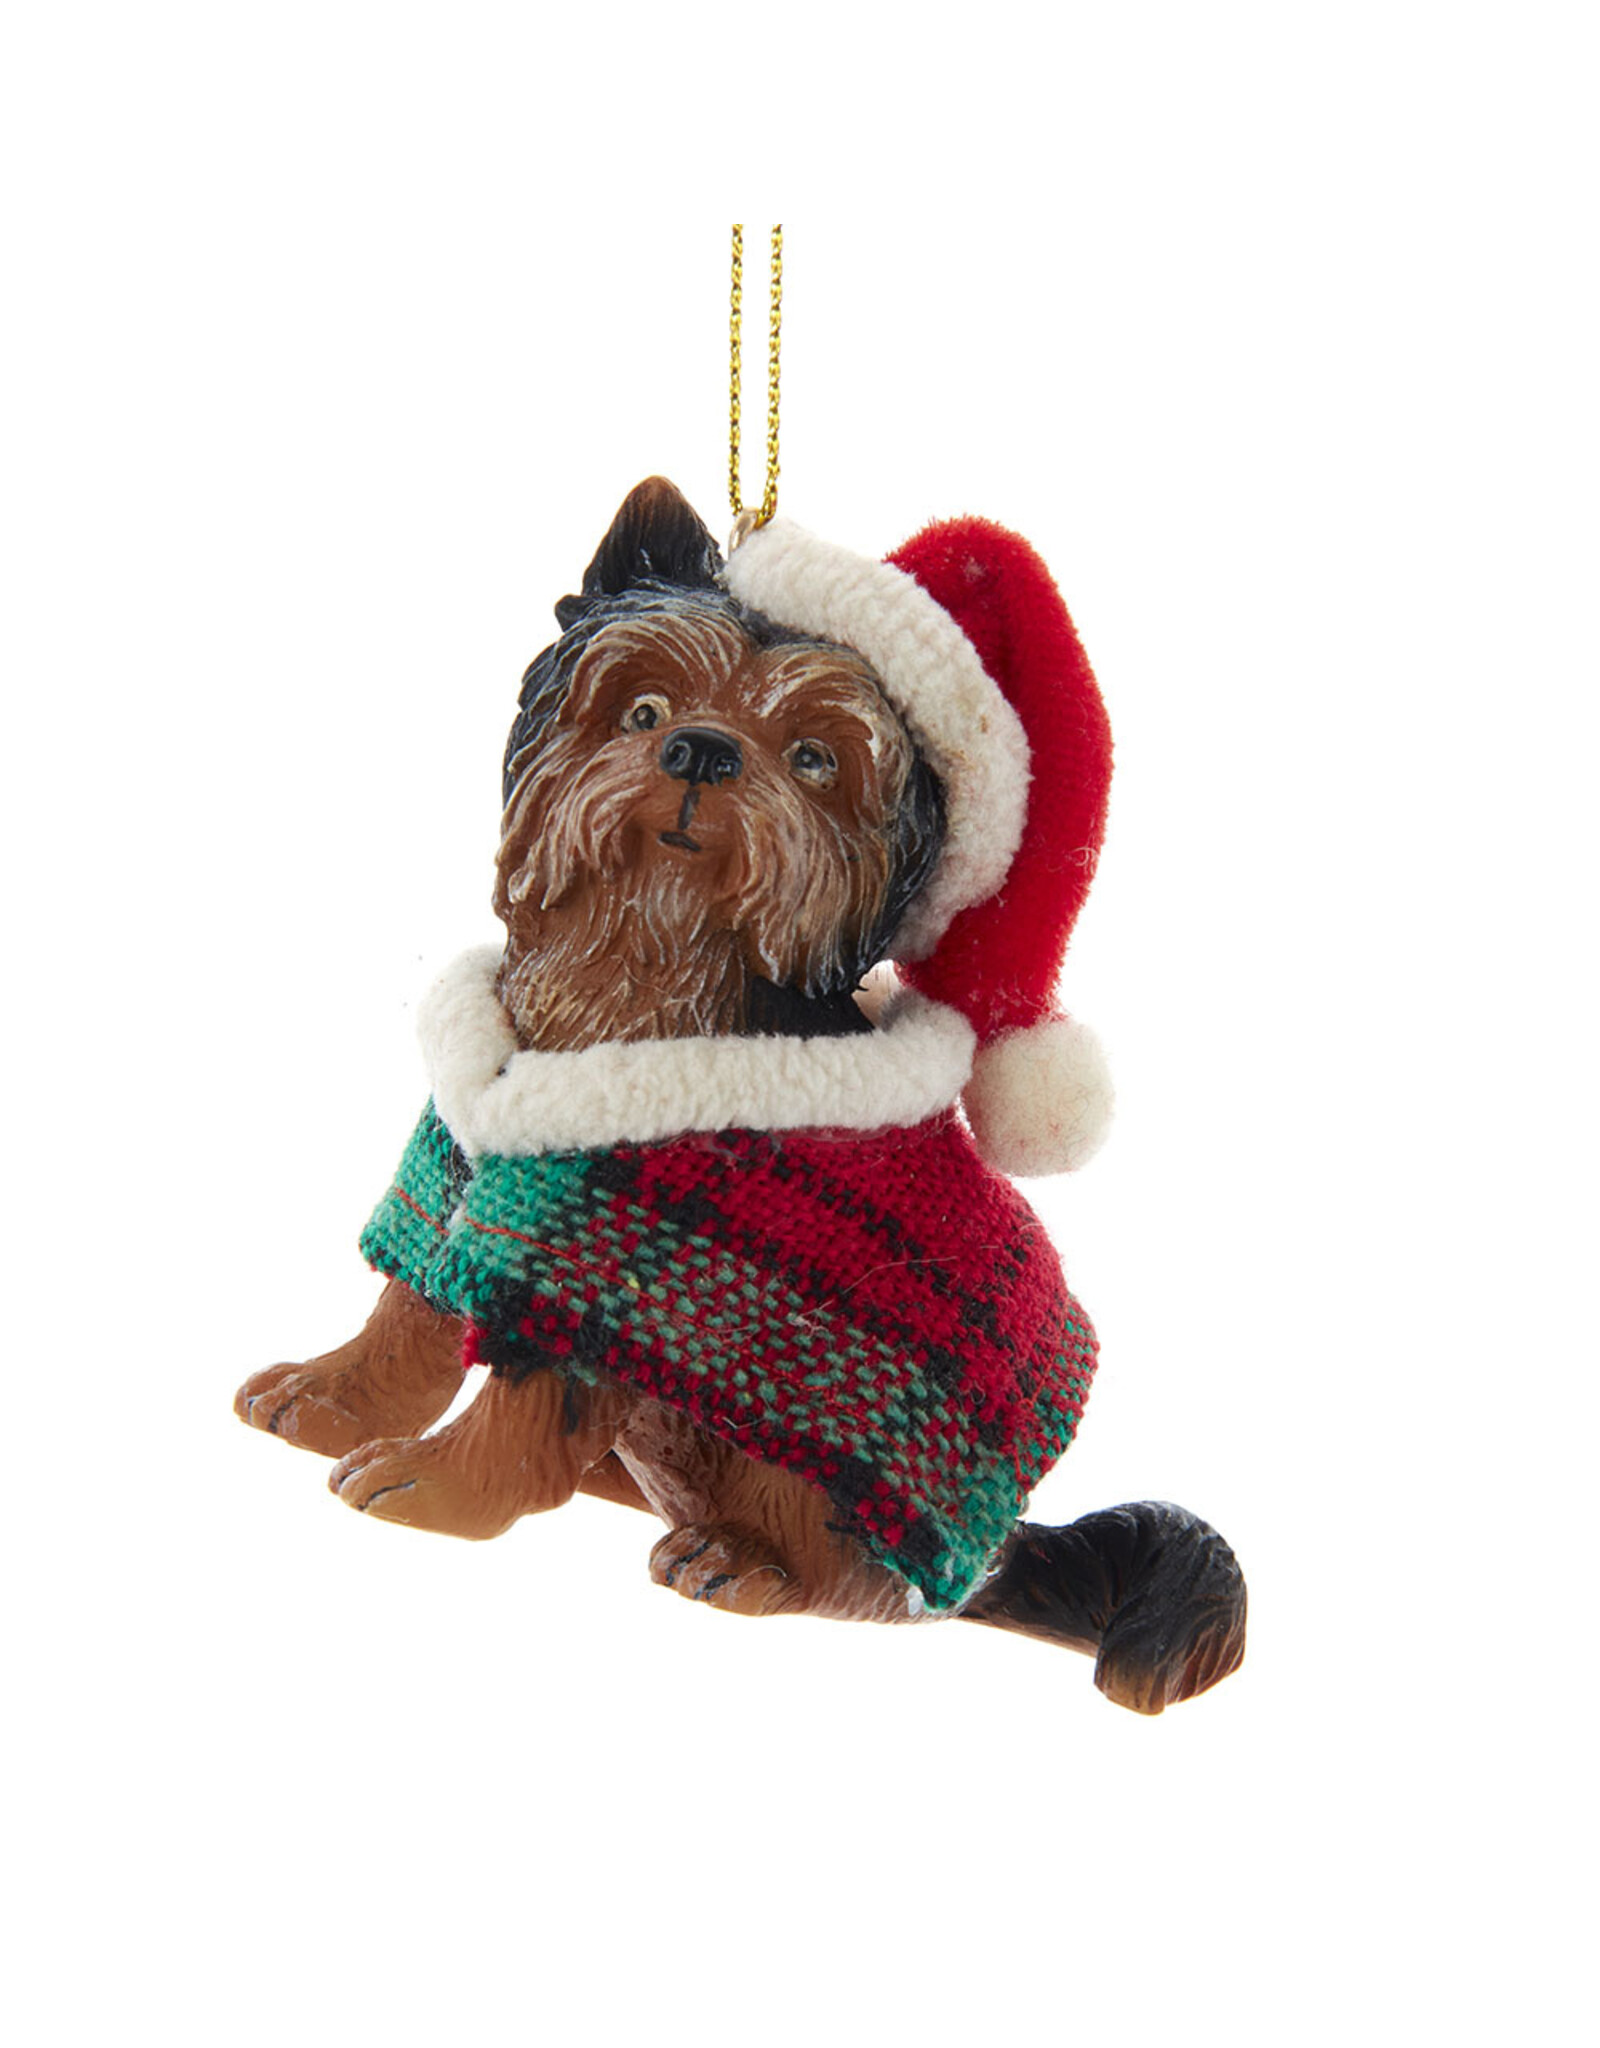 Kurt Adler Yorkshire Terrier Ornament w Plaid Coat and Santa Hat